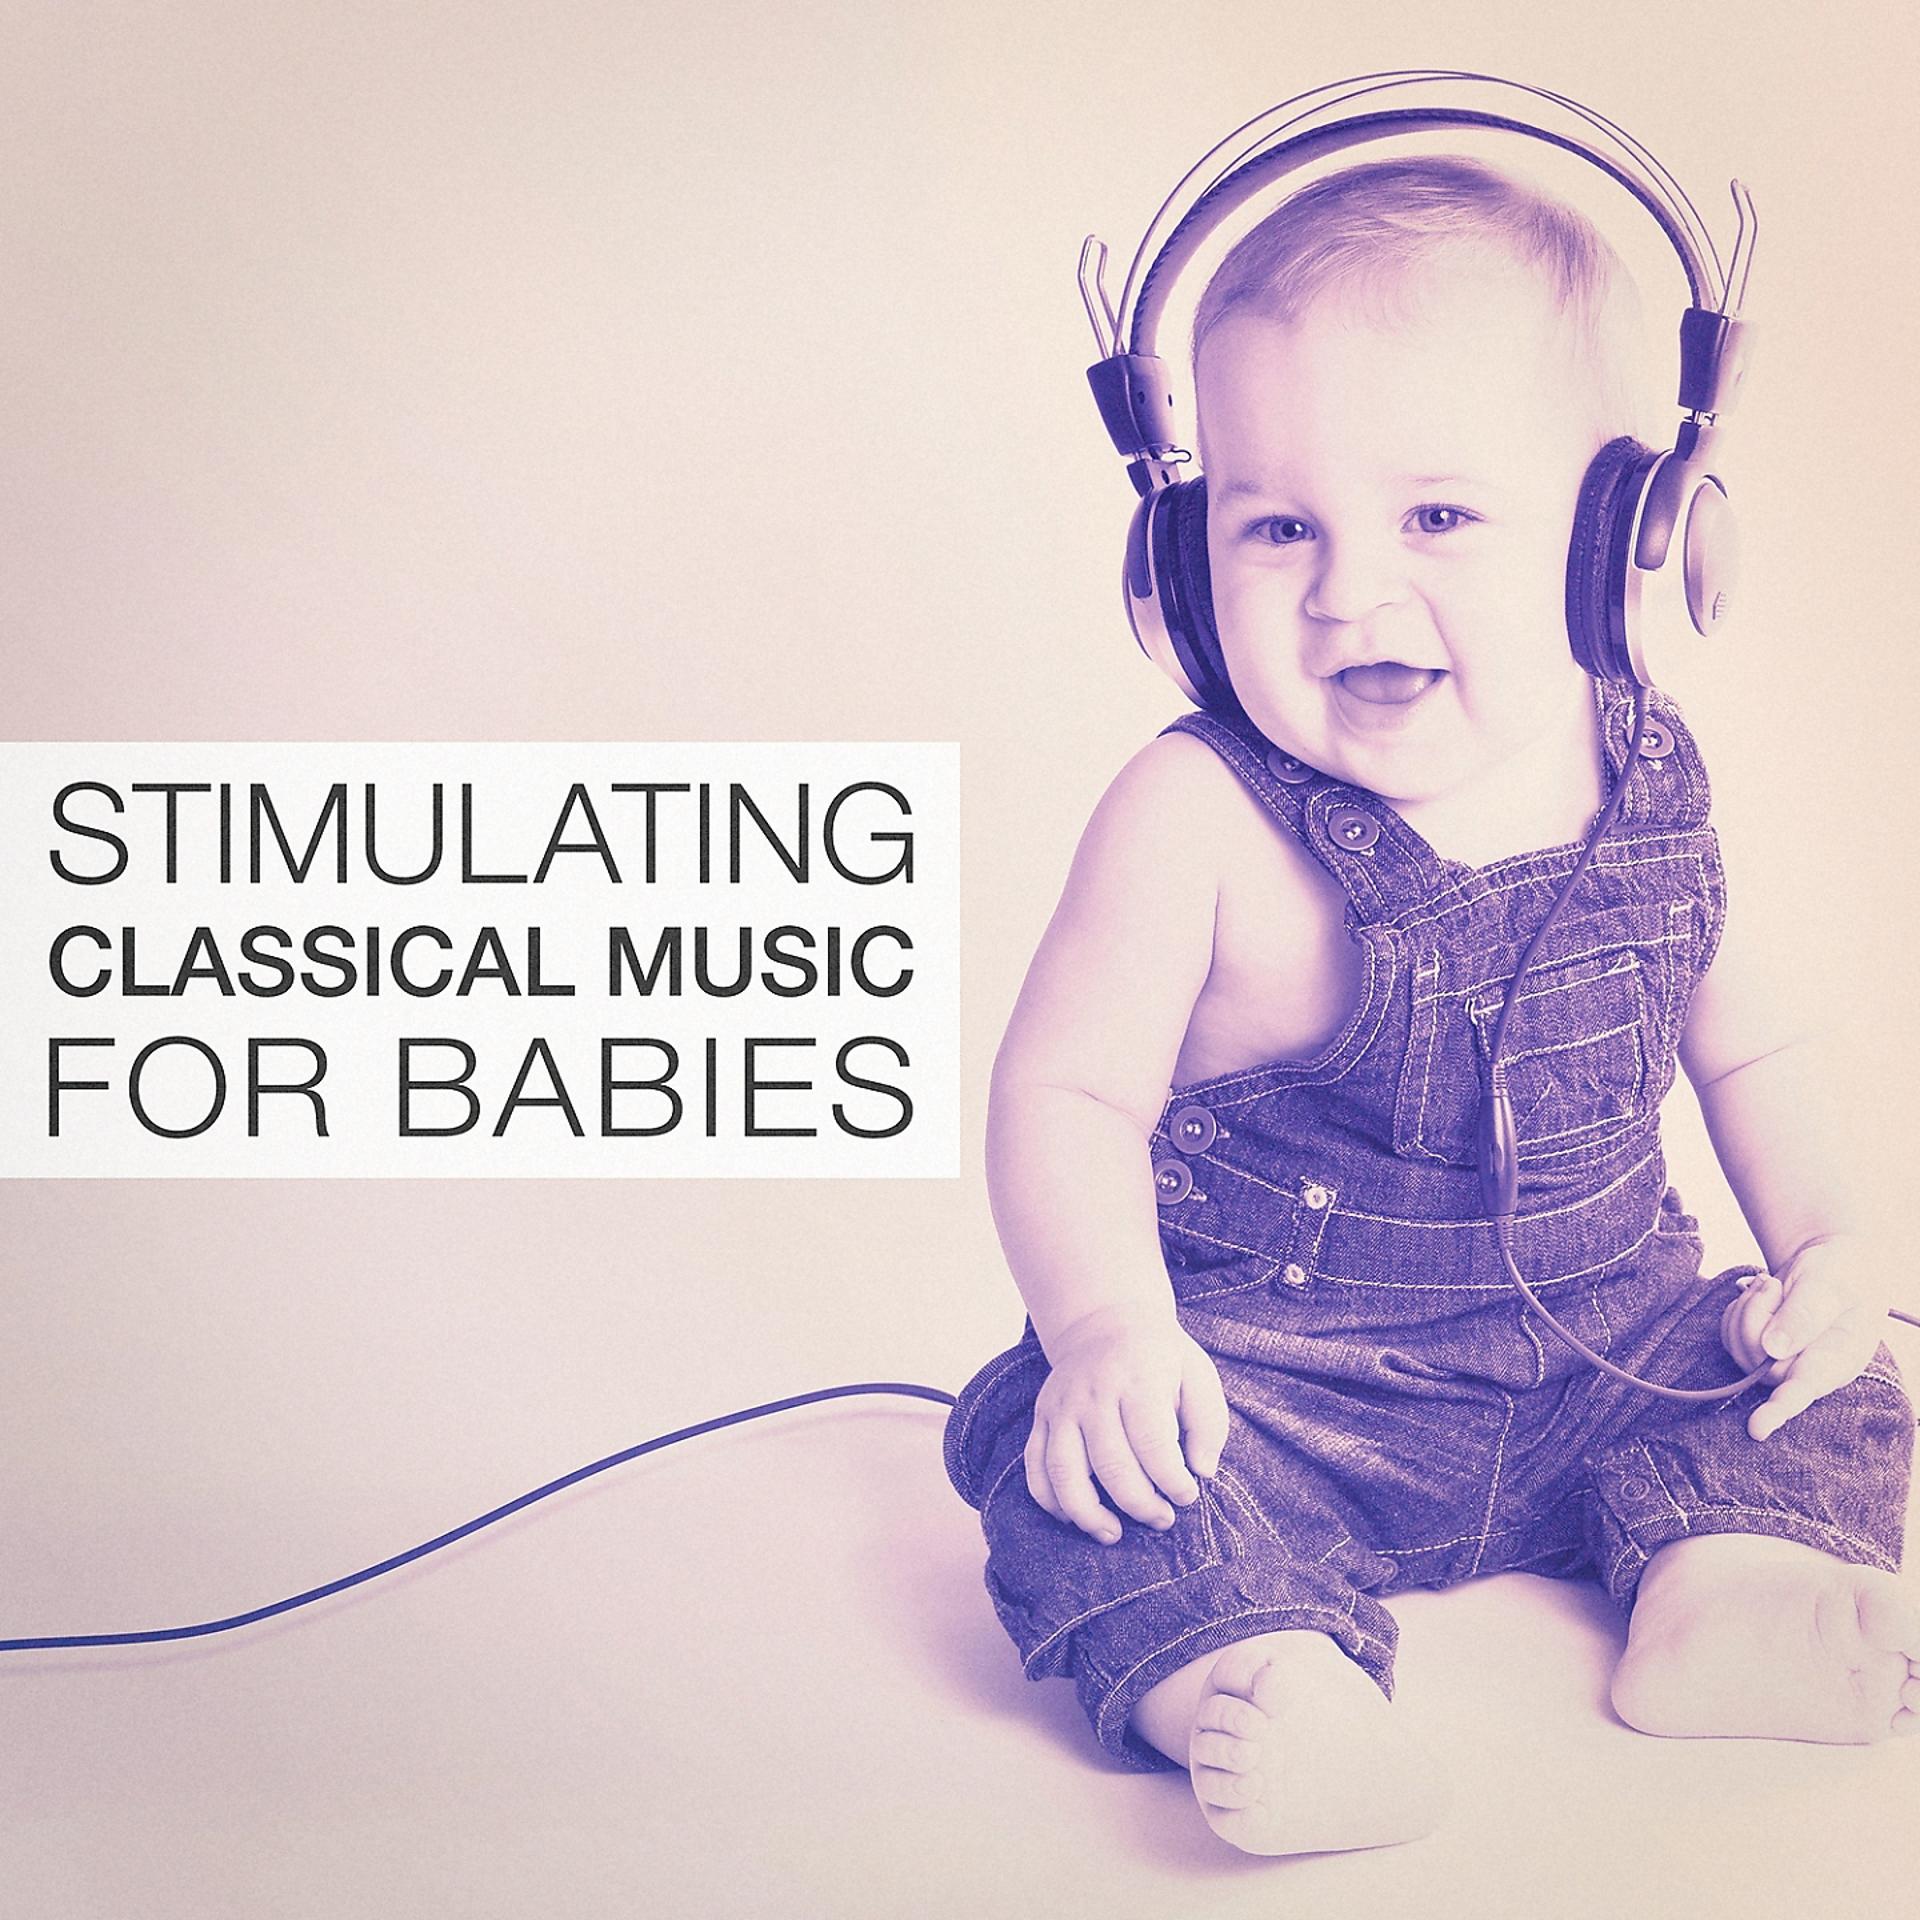 Smart Baby Songs. The Baby слушать. Baby listen Music. For Baby. Бэйби музыка